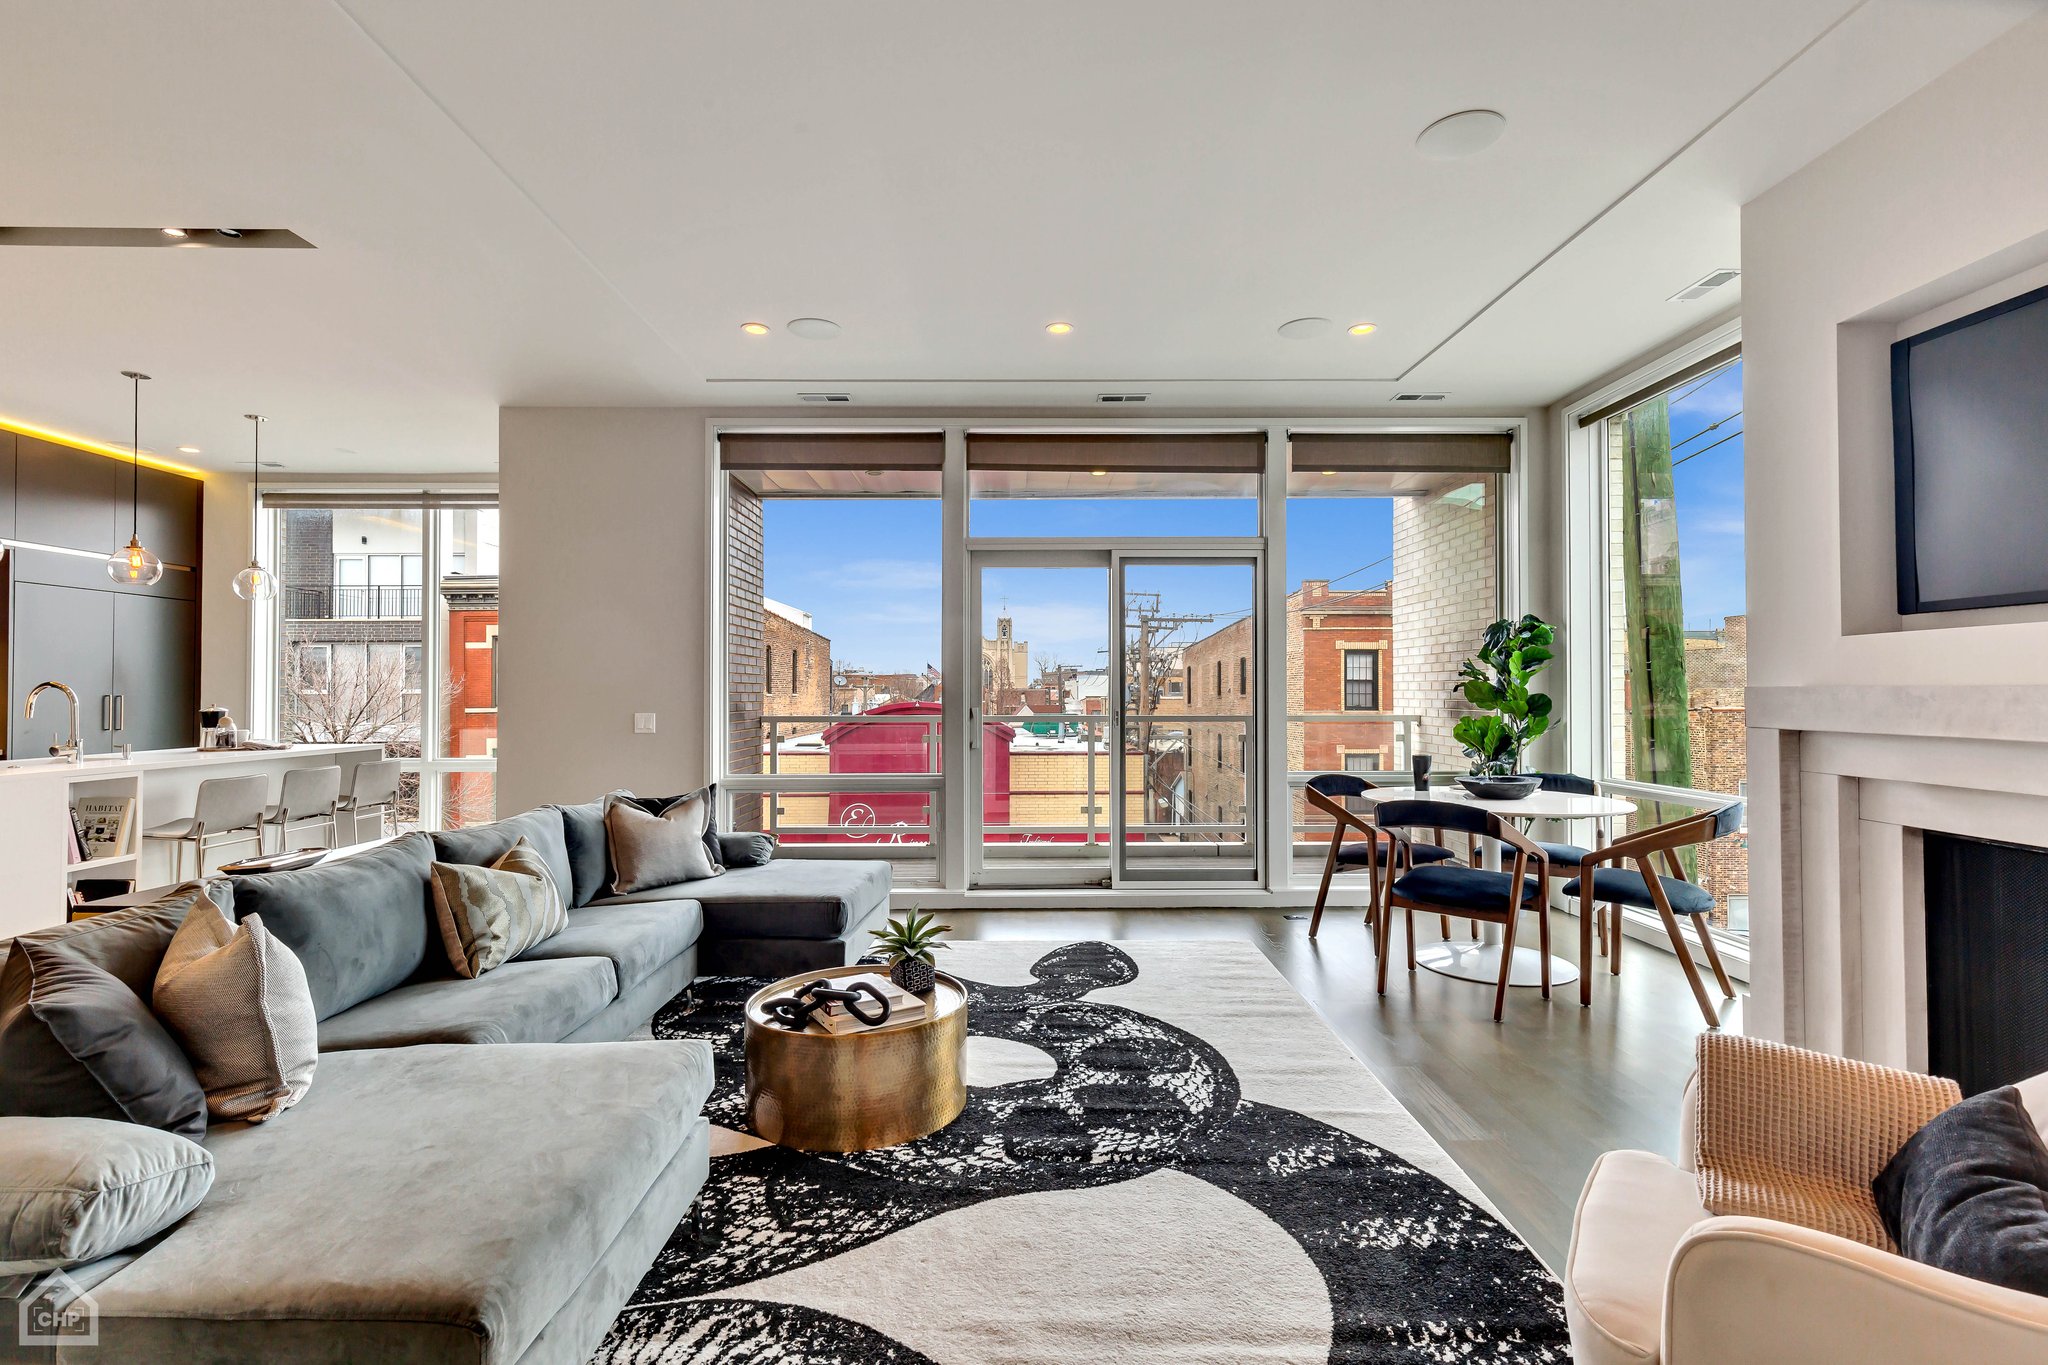 Living Room - with floor to ceilign Pella windows and patio doors